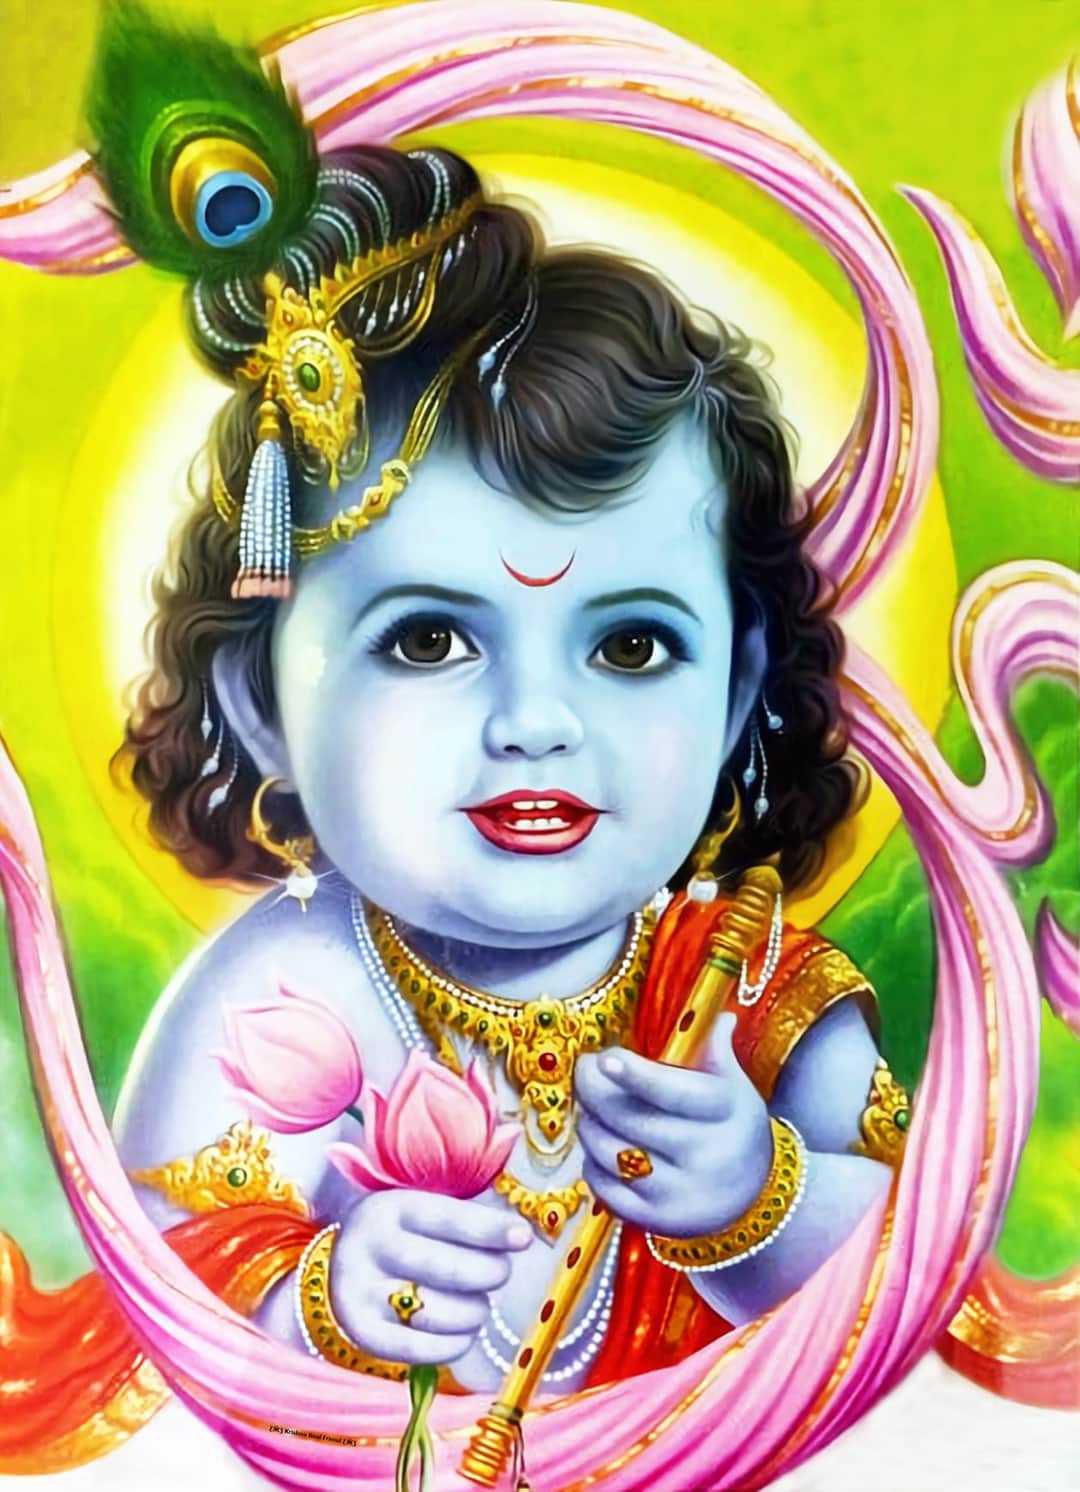 Little Krishna Baby Wallpapers